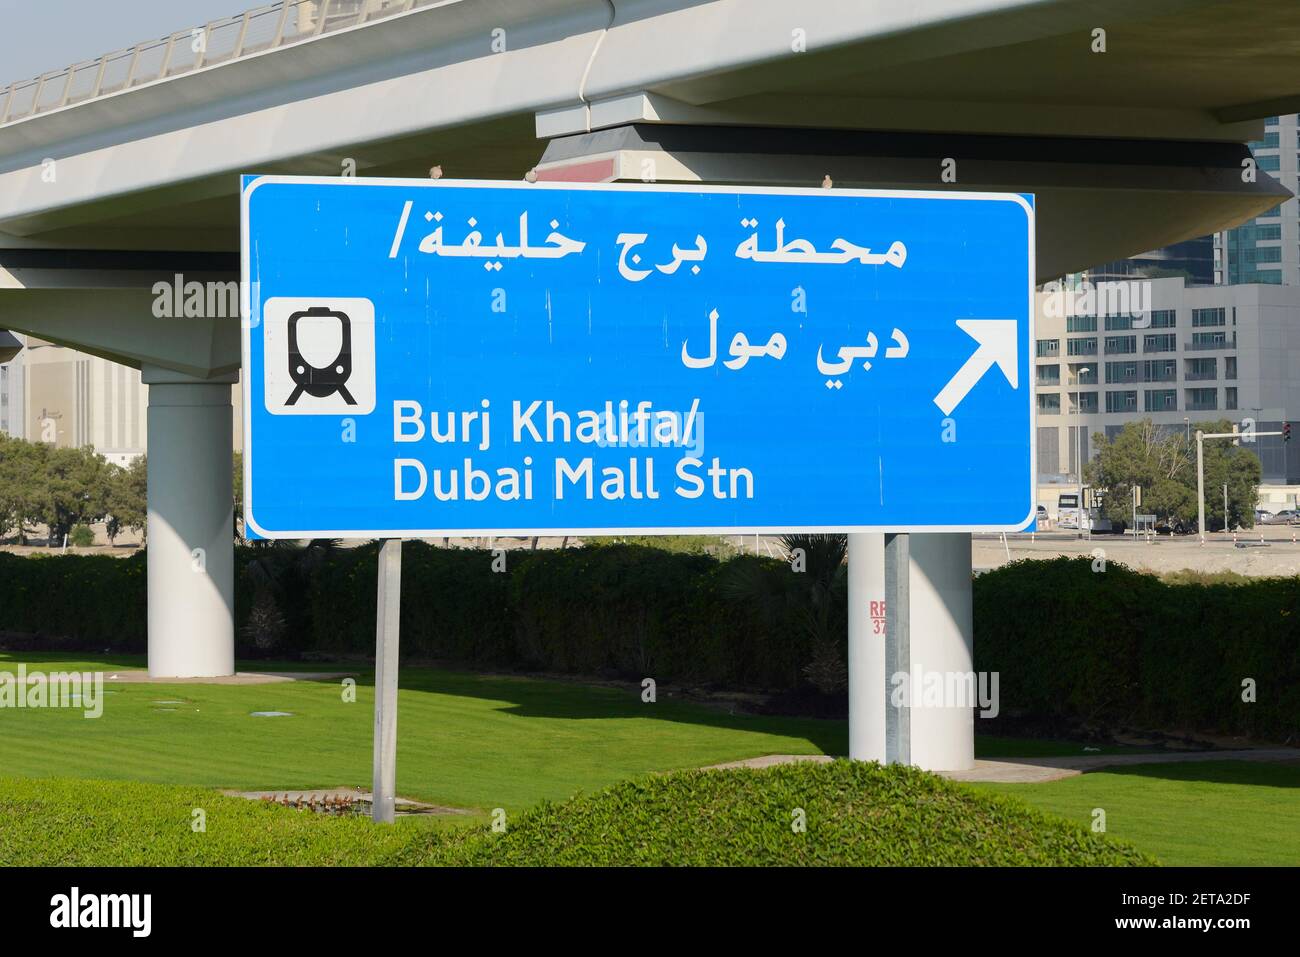 Burj Khalifa and Dubai Mall Metro Station in Dubai. Public transport sign in Dubai in english and arabic. Stock Photo